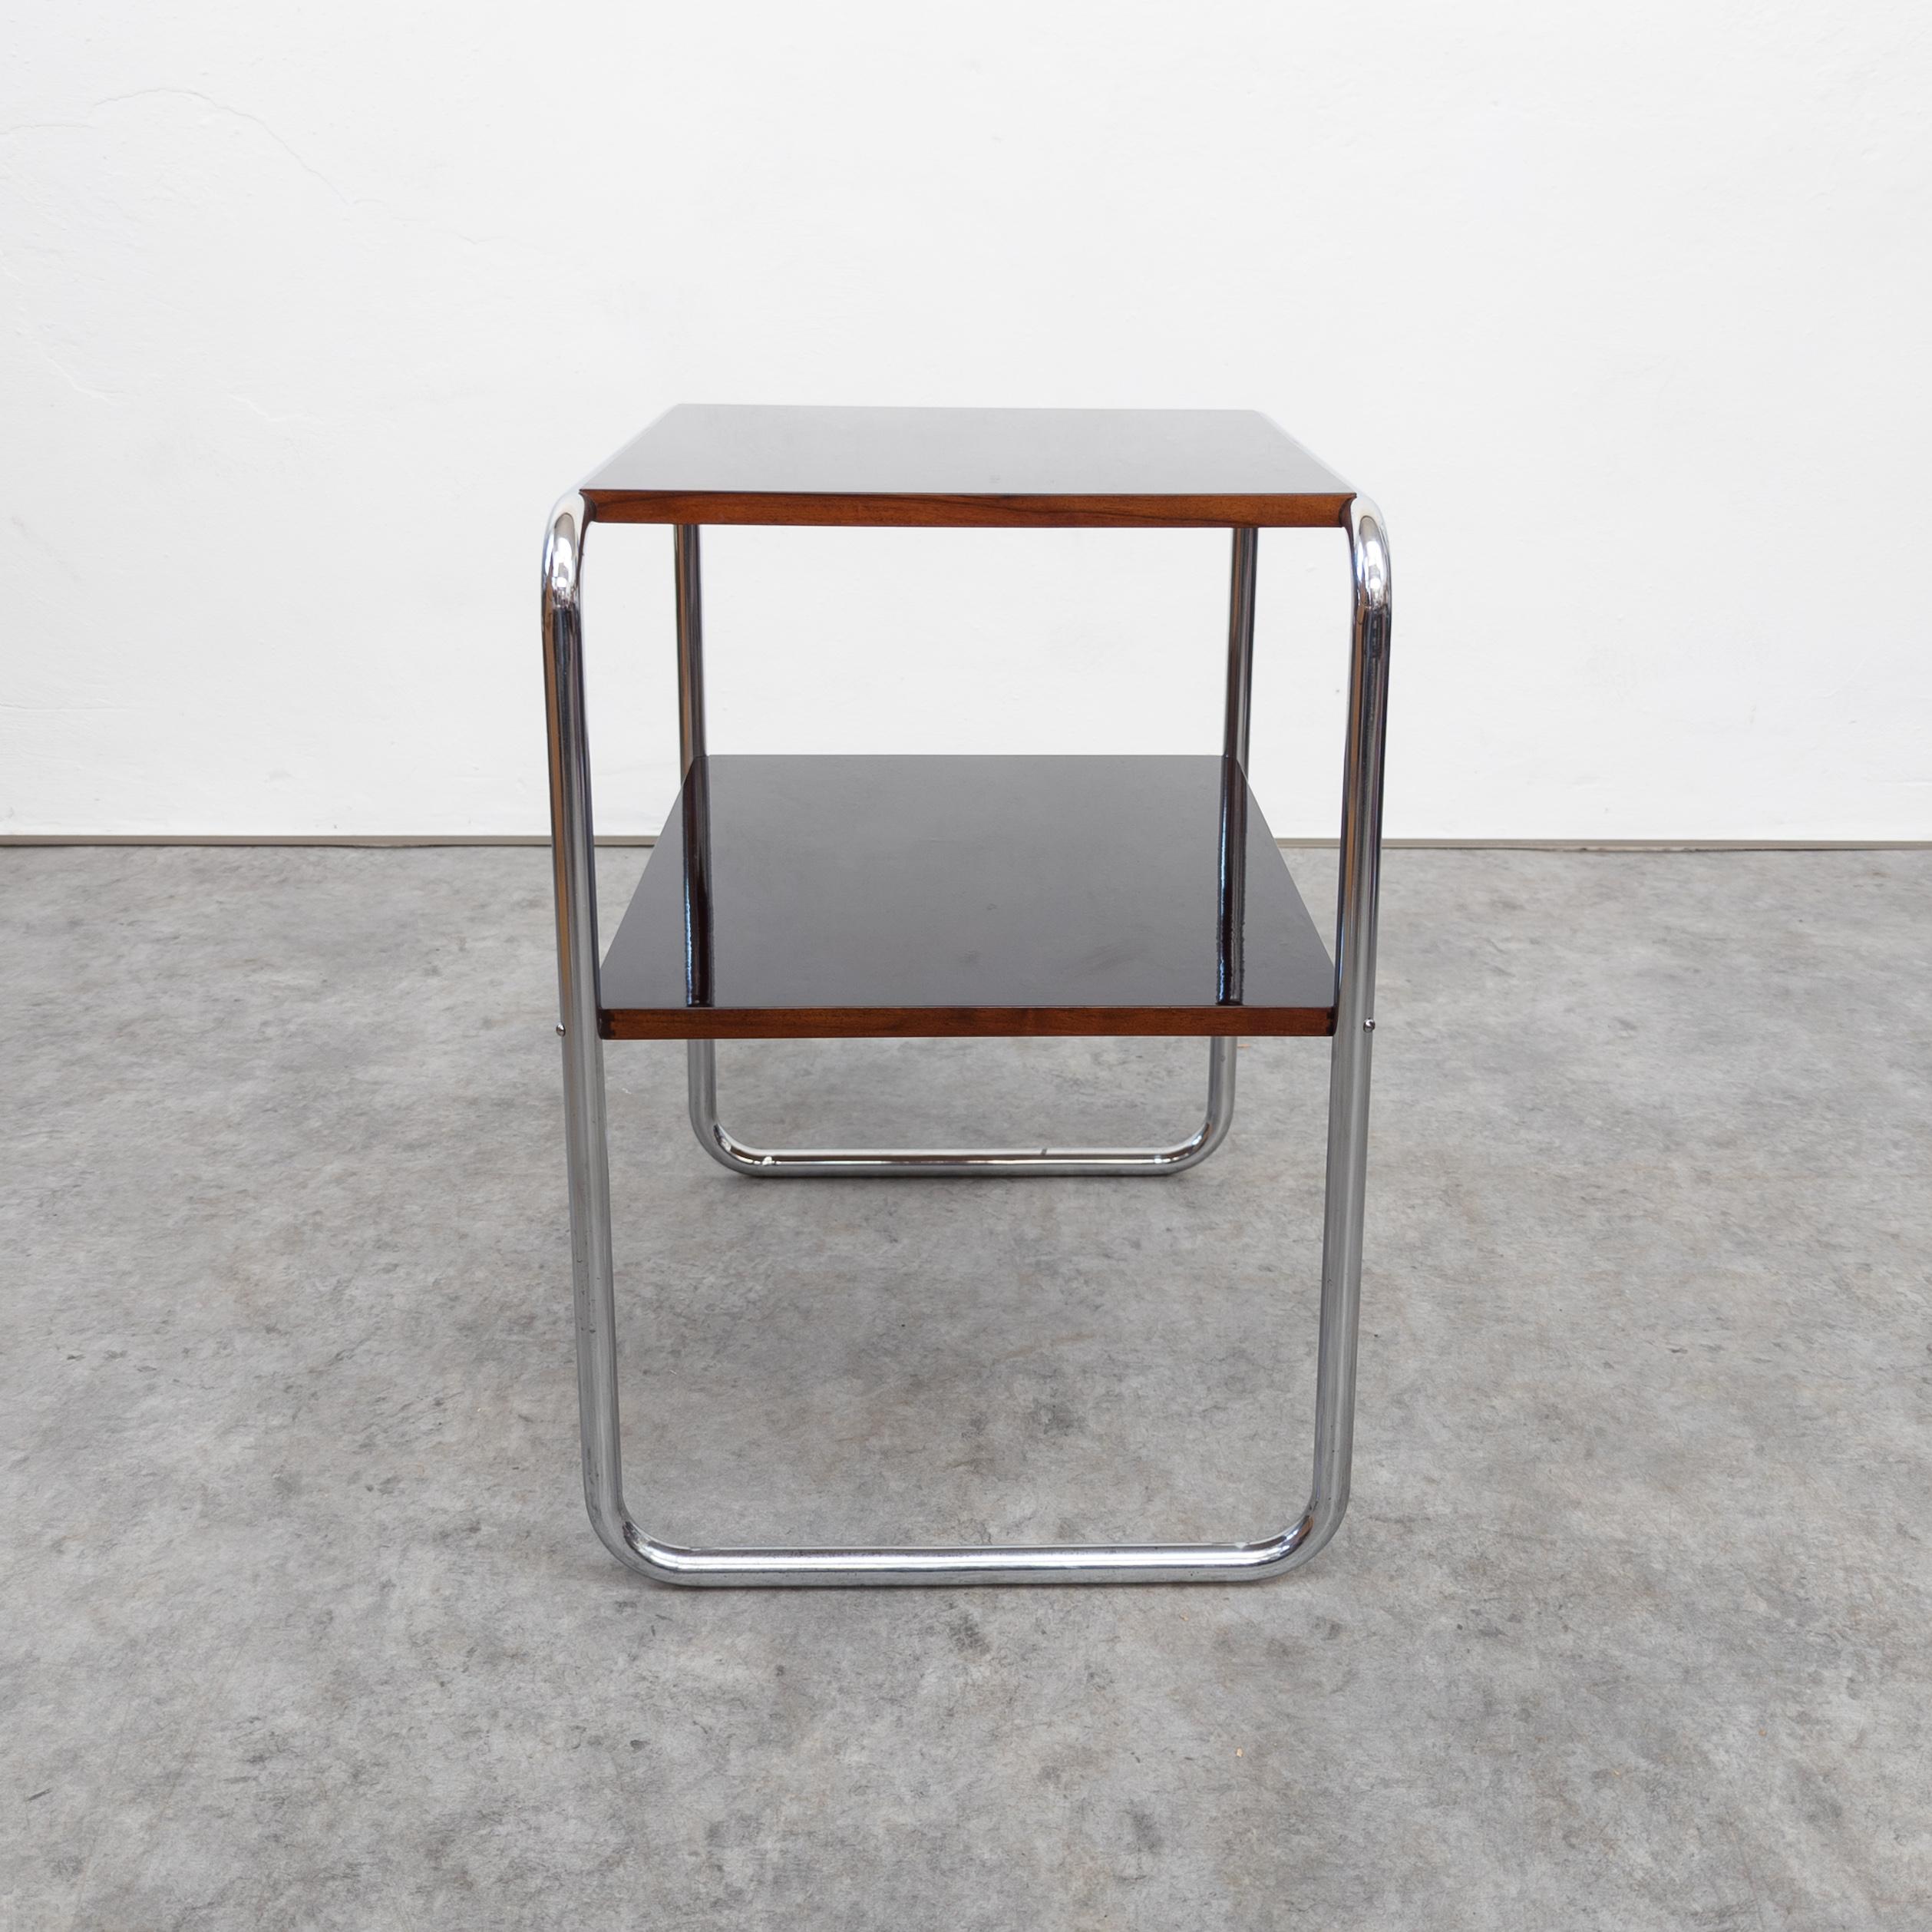 Steel Rare restored Bauhaus tubular steel side table by Marcel Breuer  For Sale